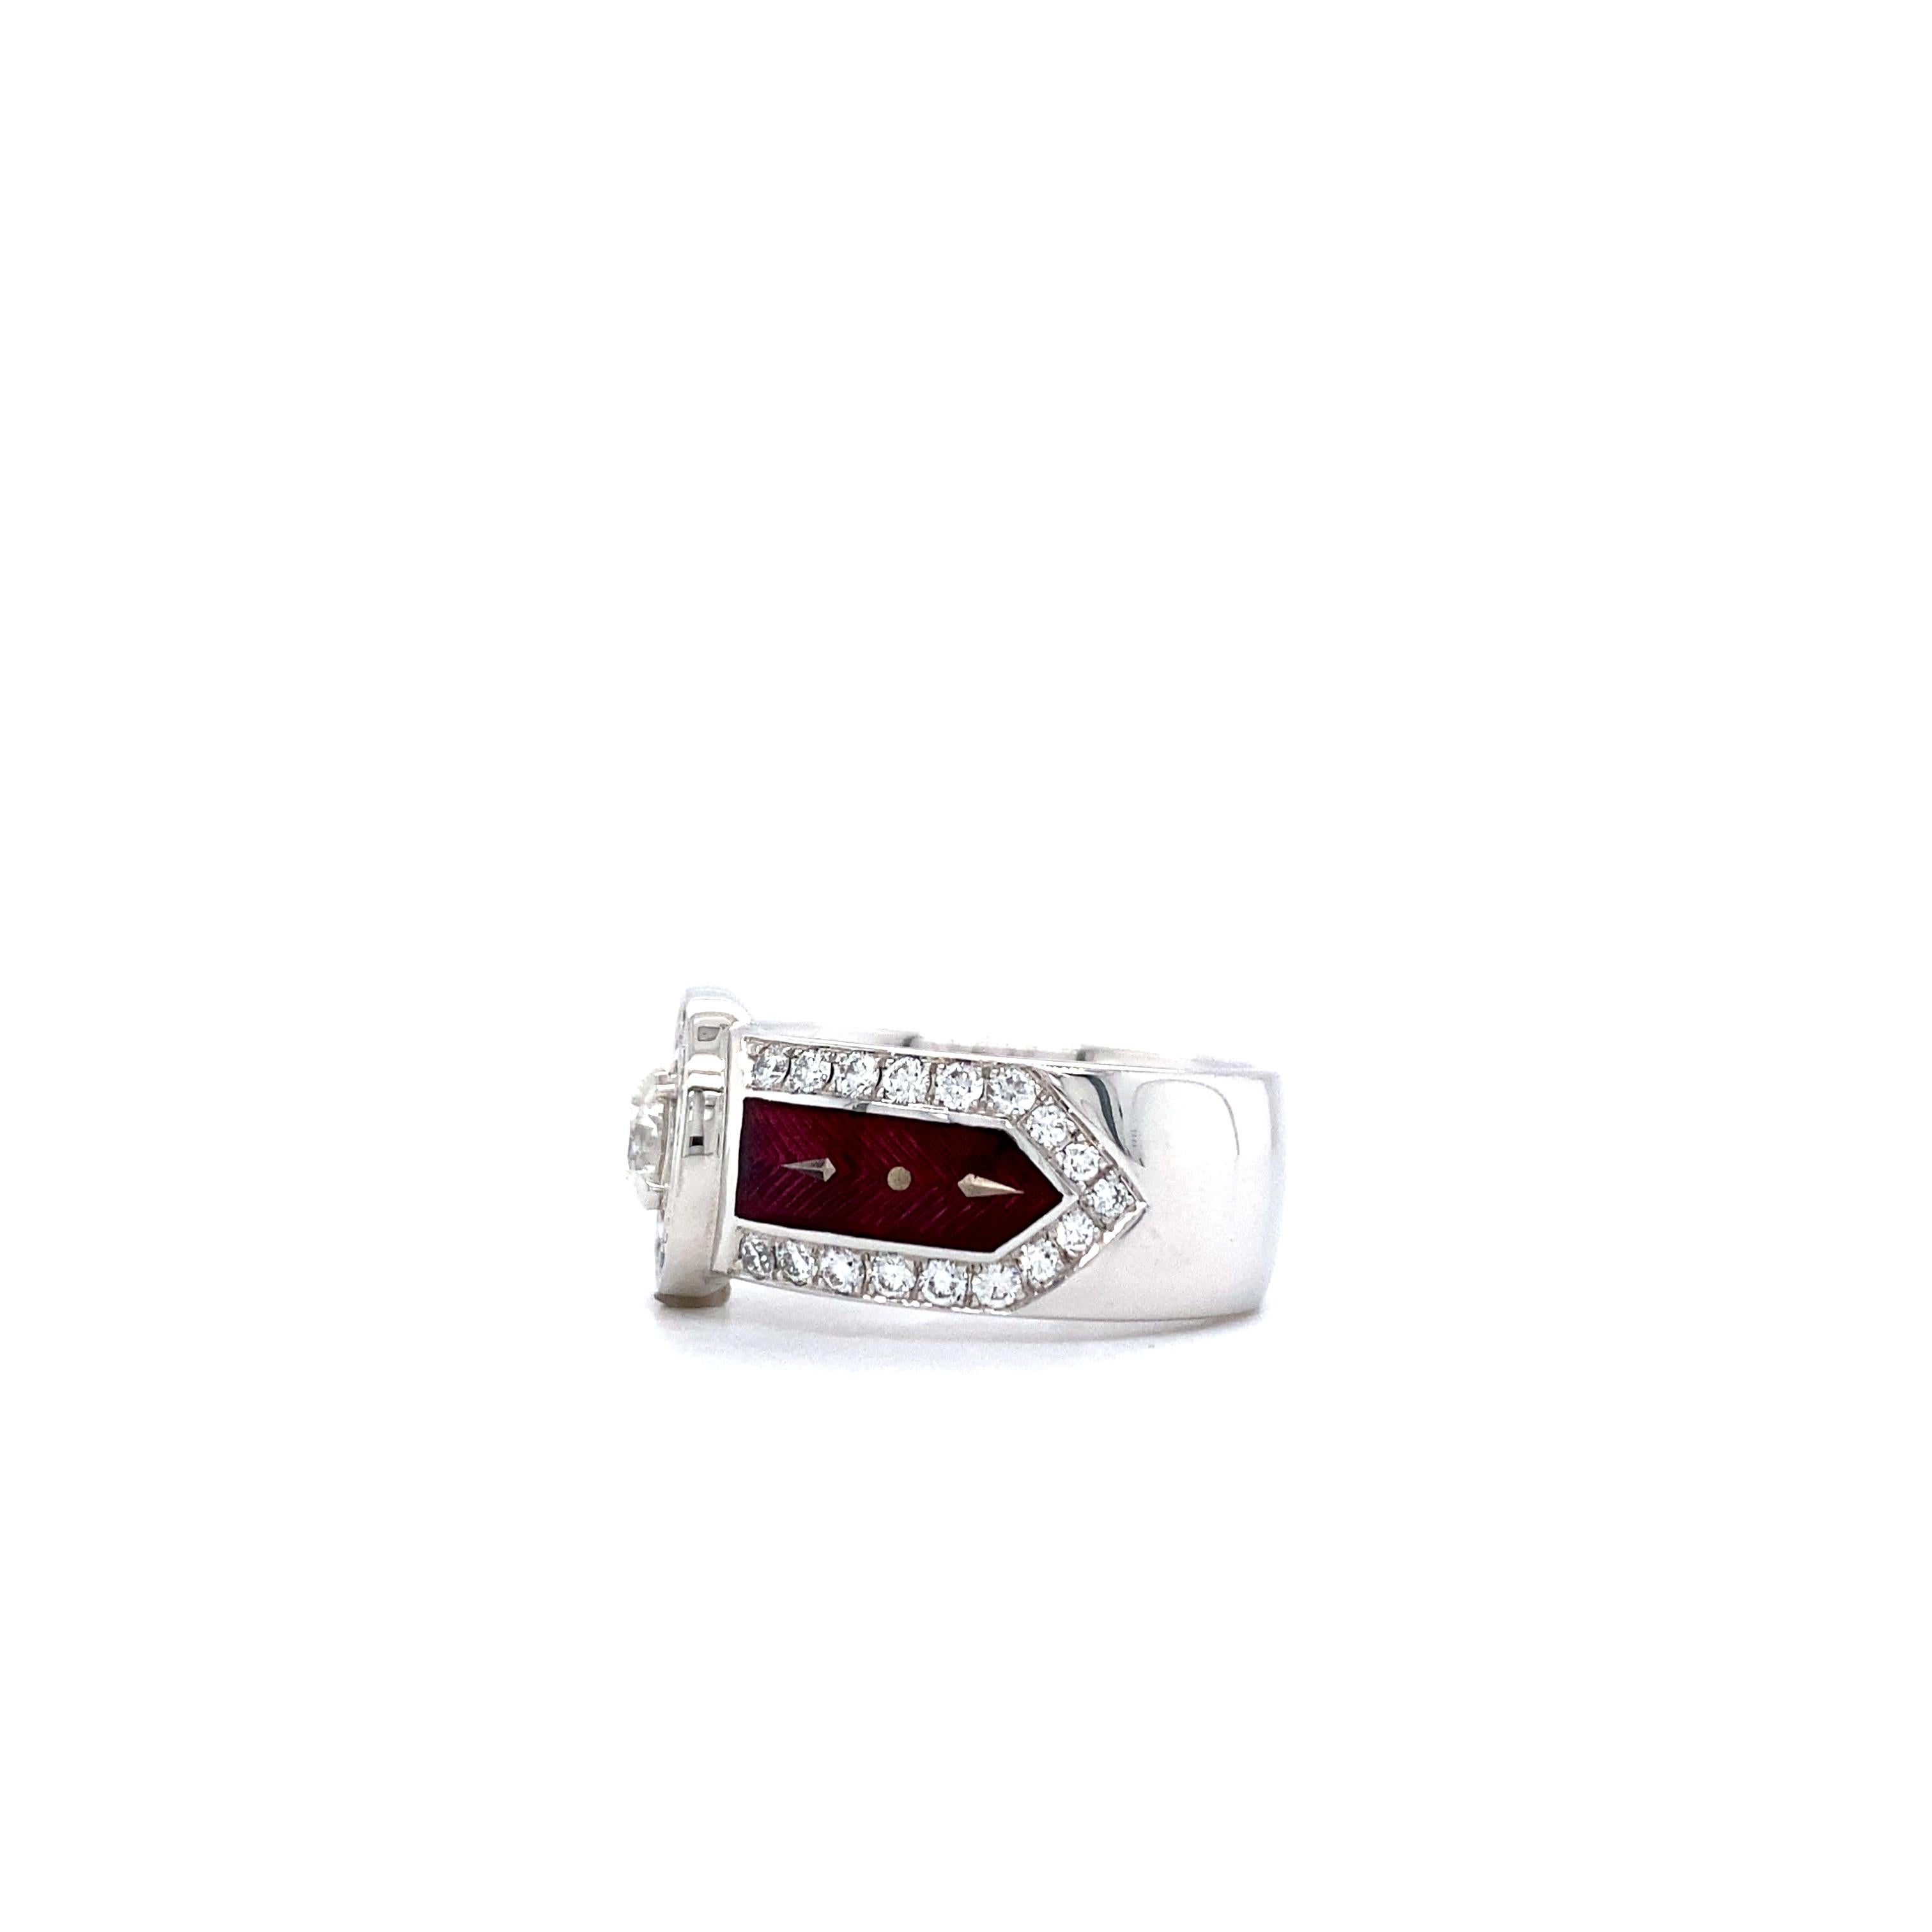 Victor Mayer Ring Red Vitreous Enamel 18k White Gold 51 Diamonds 1.20 ct For Sale 2